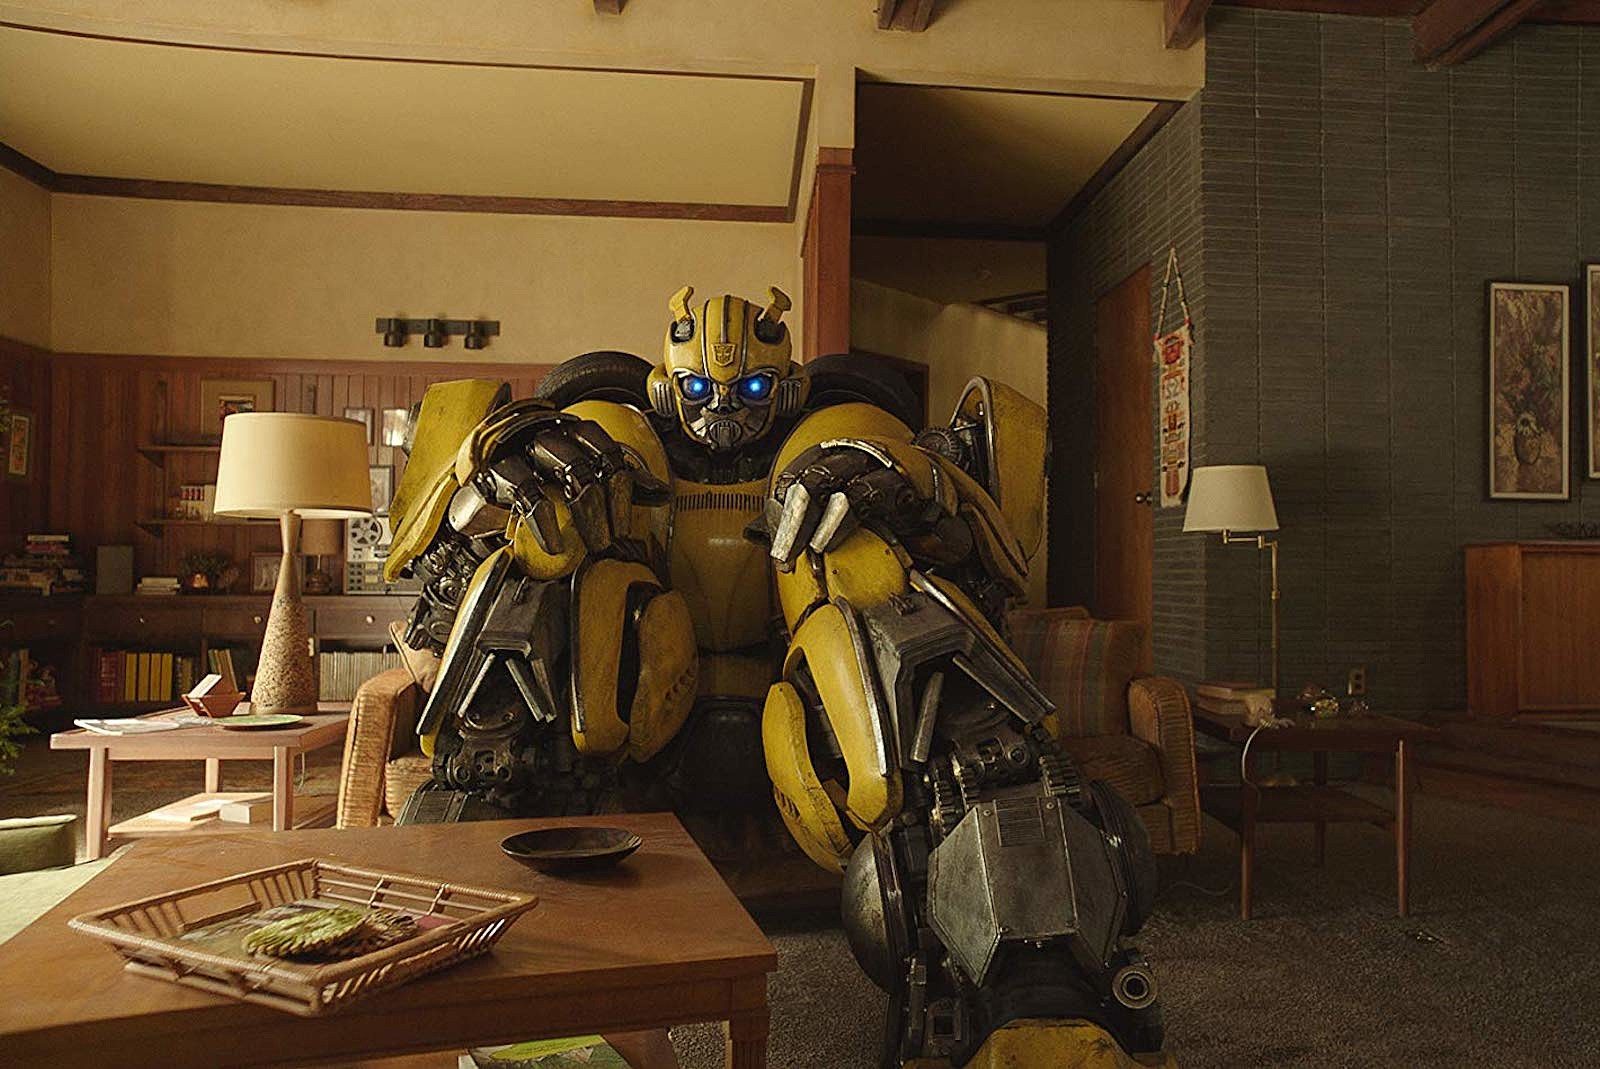 transformers bumblebee movie 2018